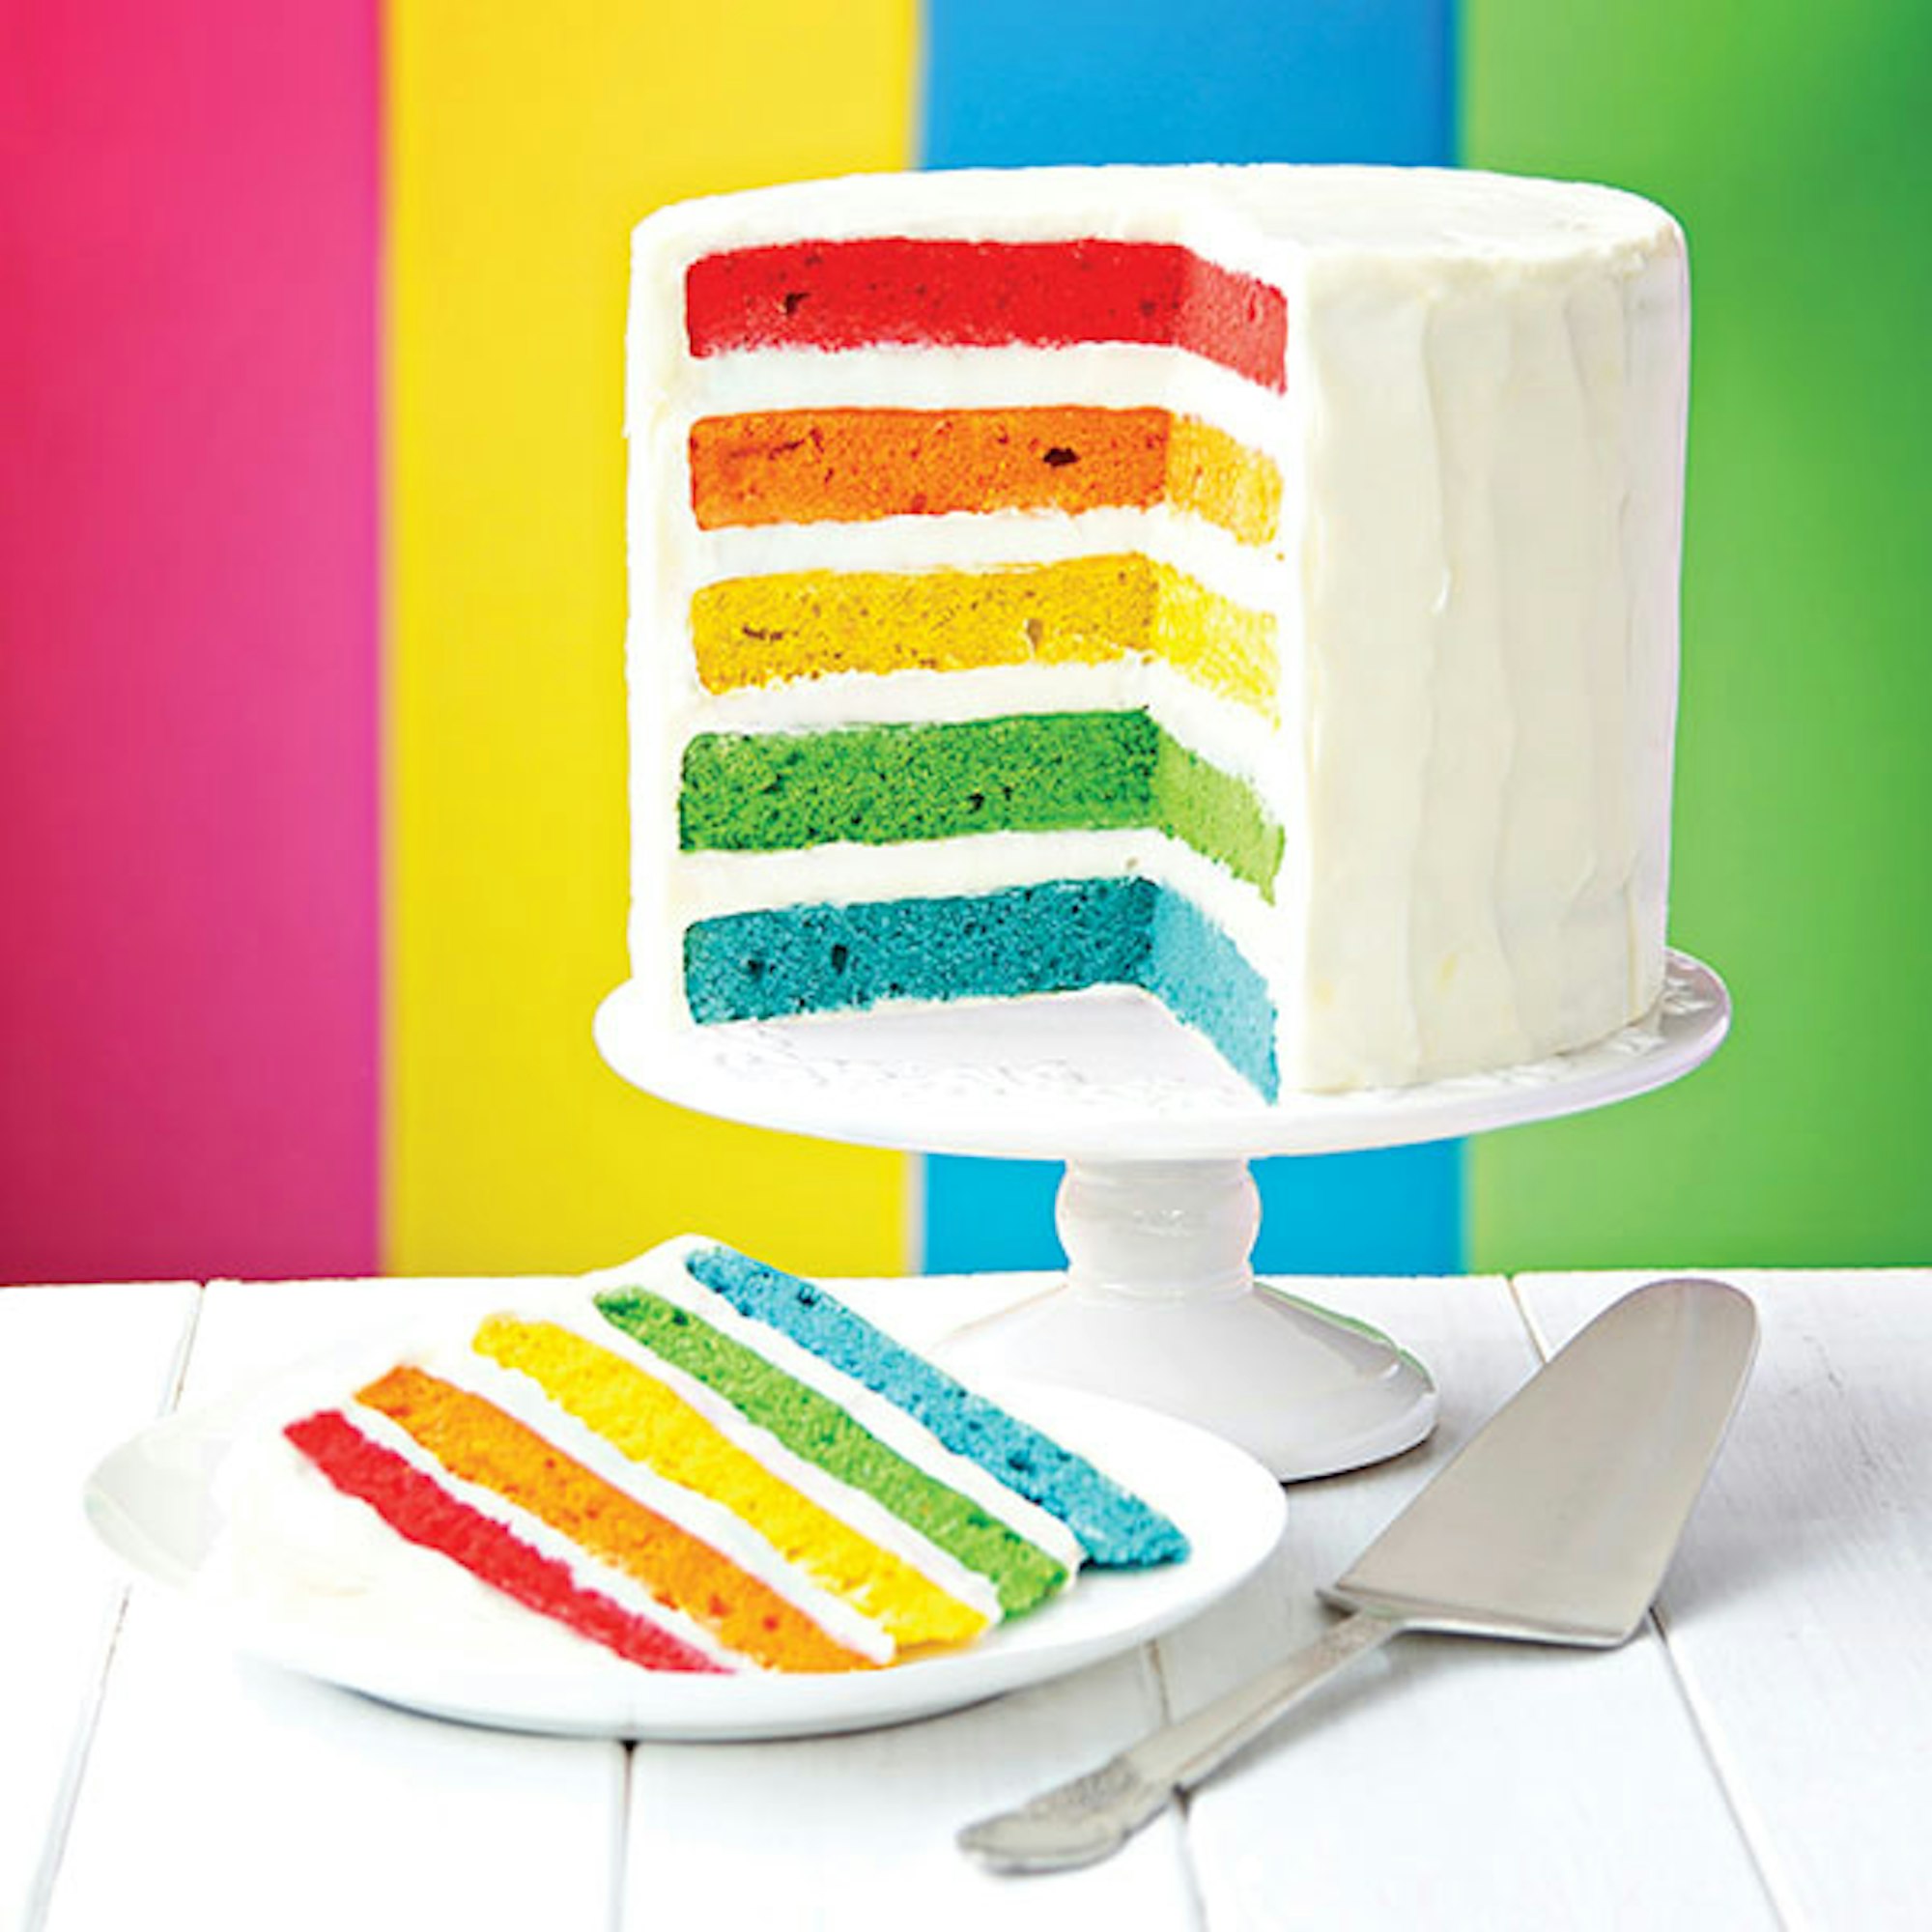 Rainbow Cake Recipe 